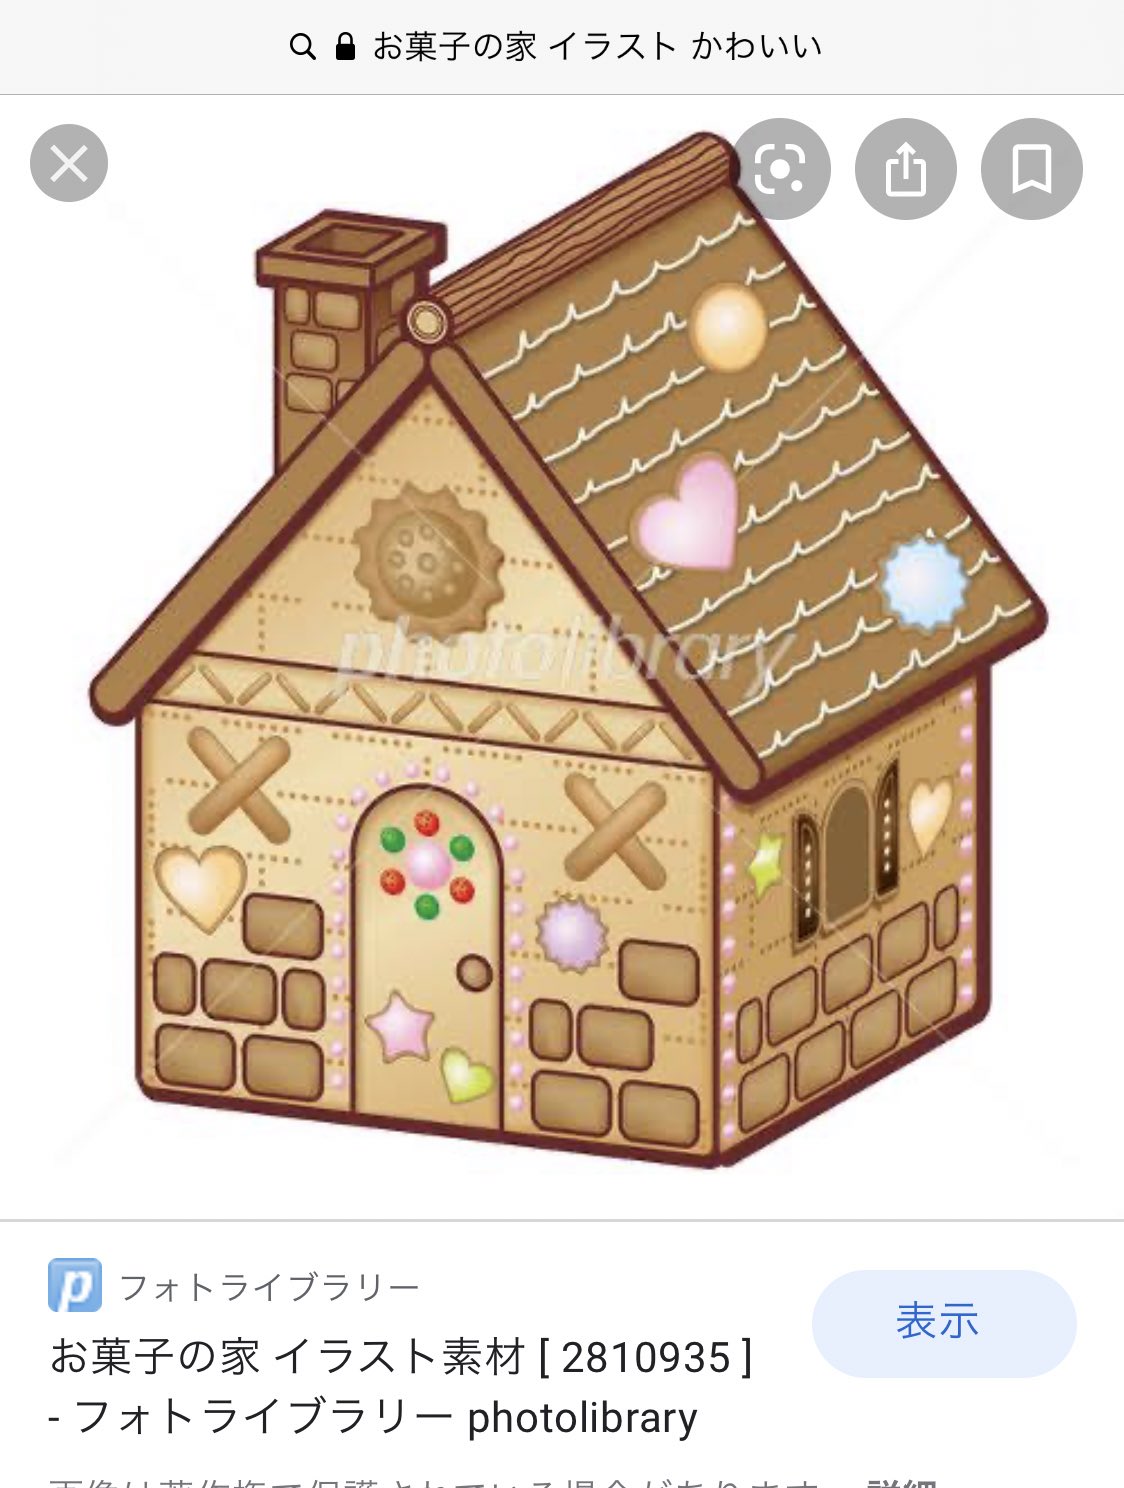 Uzivatel しめろでぃ Na Twitteru お菓子の家も お菓子の家 イラスト かわいい で検索してからアレンジ加えてるのまじで可愛いな